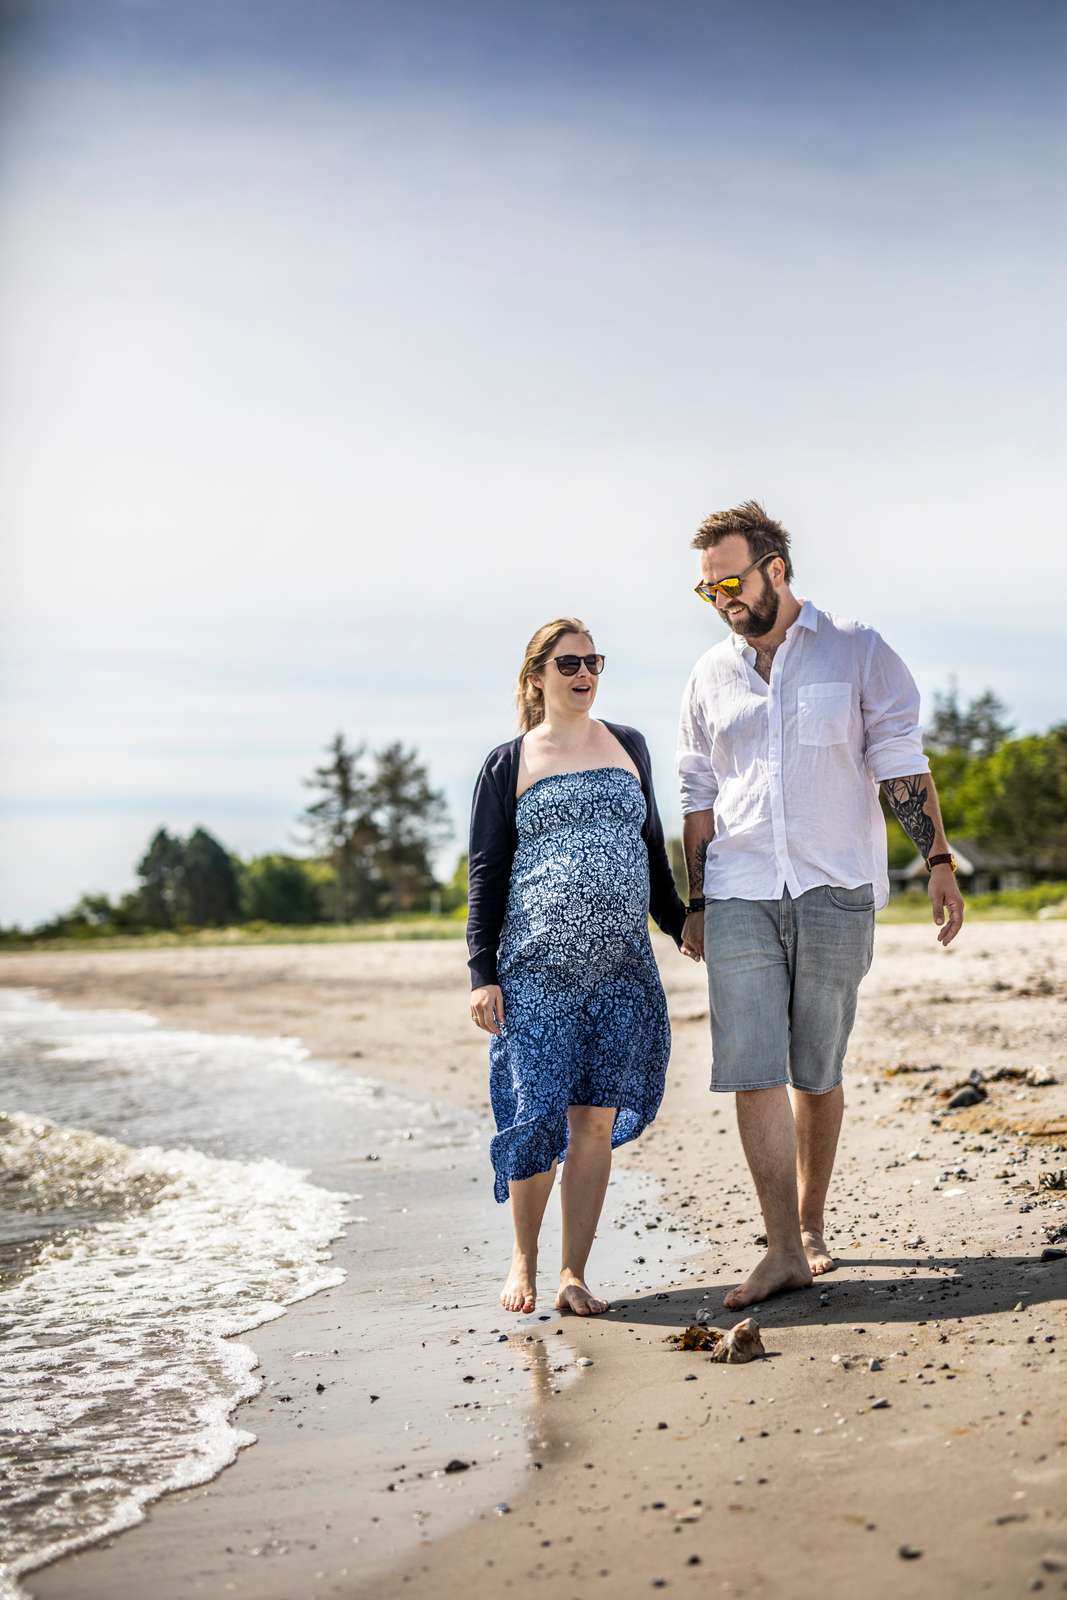 dyngby-beach-couple-destination-kystlandet-2020.jpg